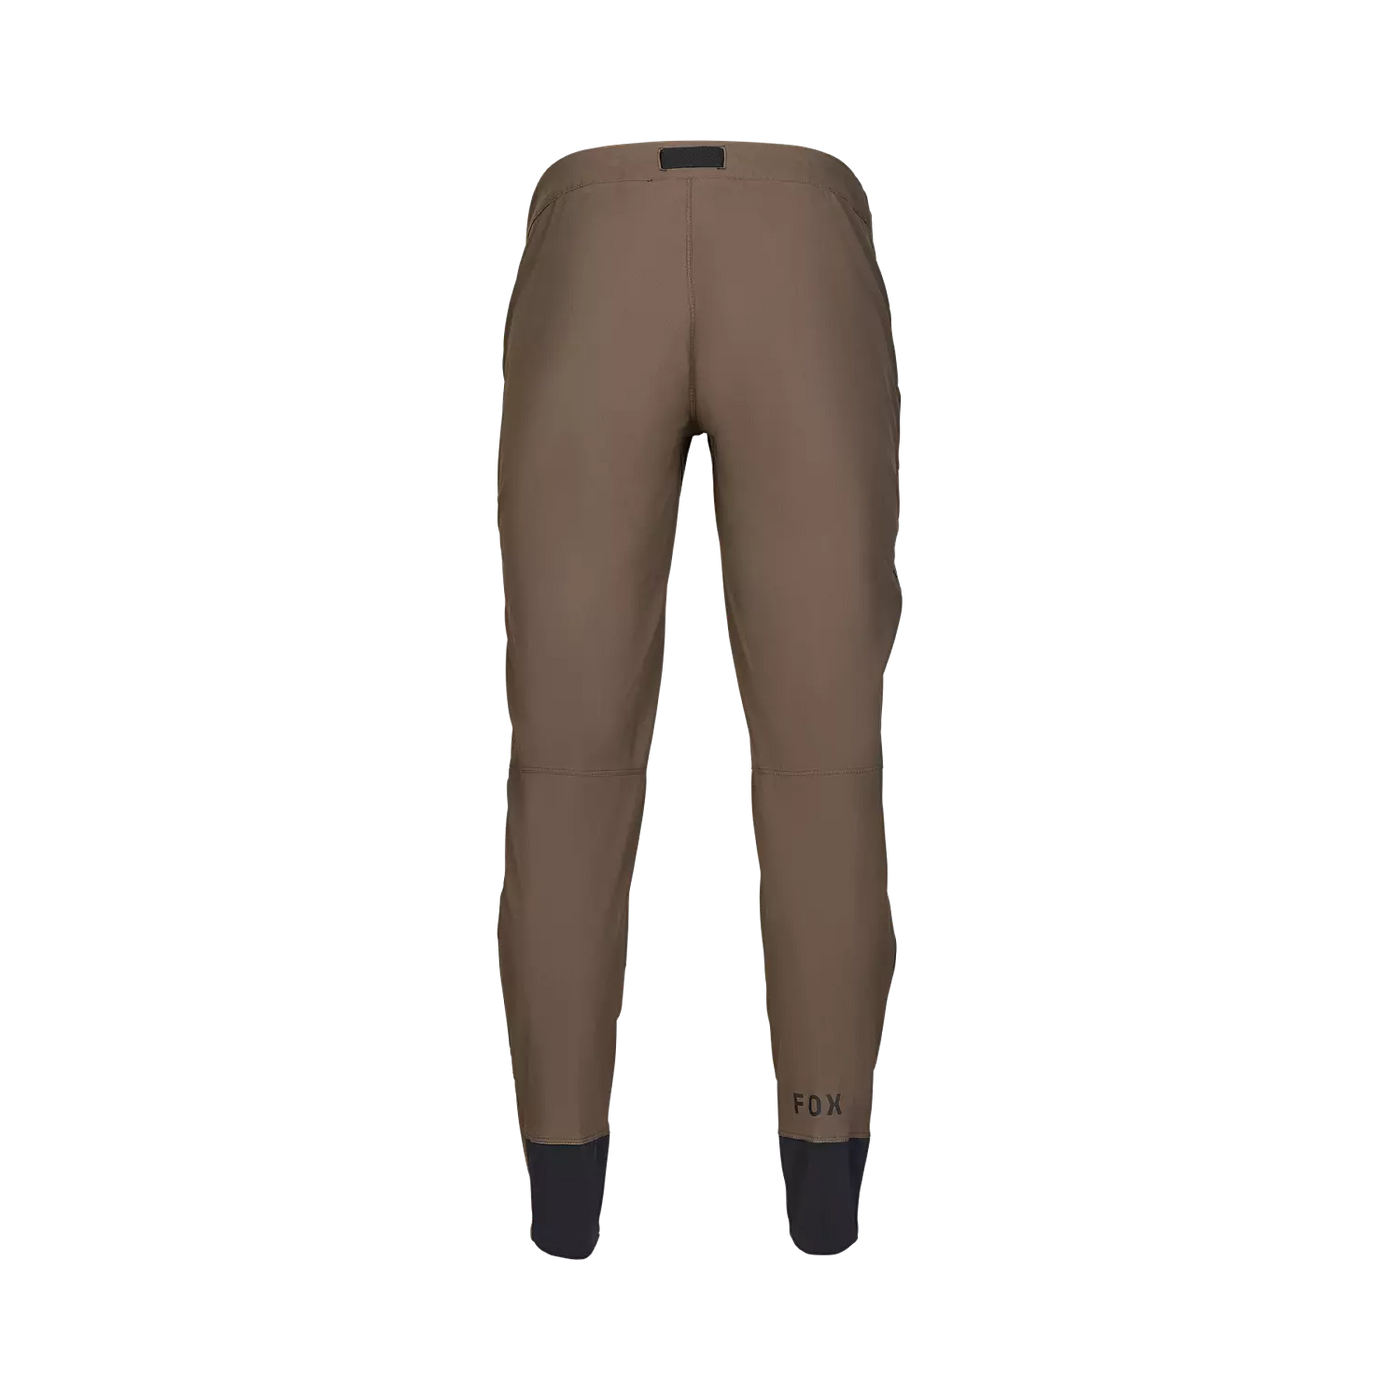 Ranger MTB Pants (Women's)